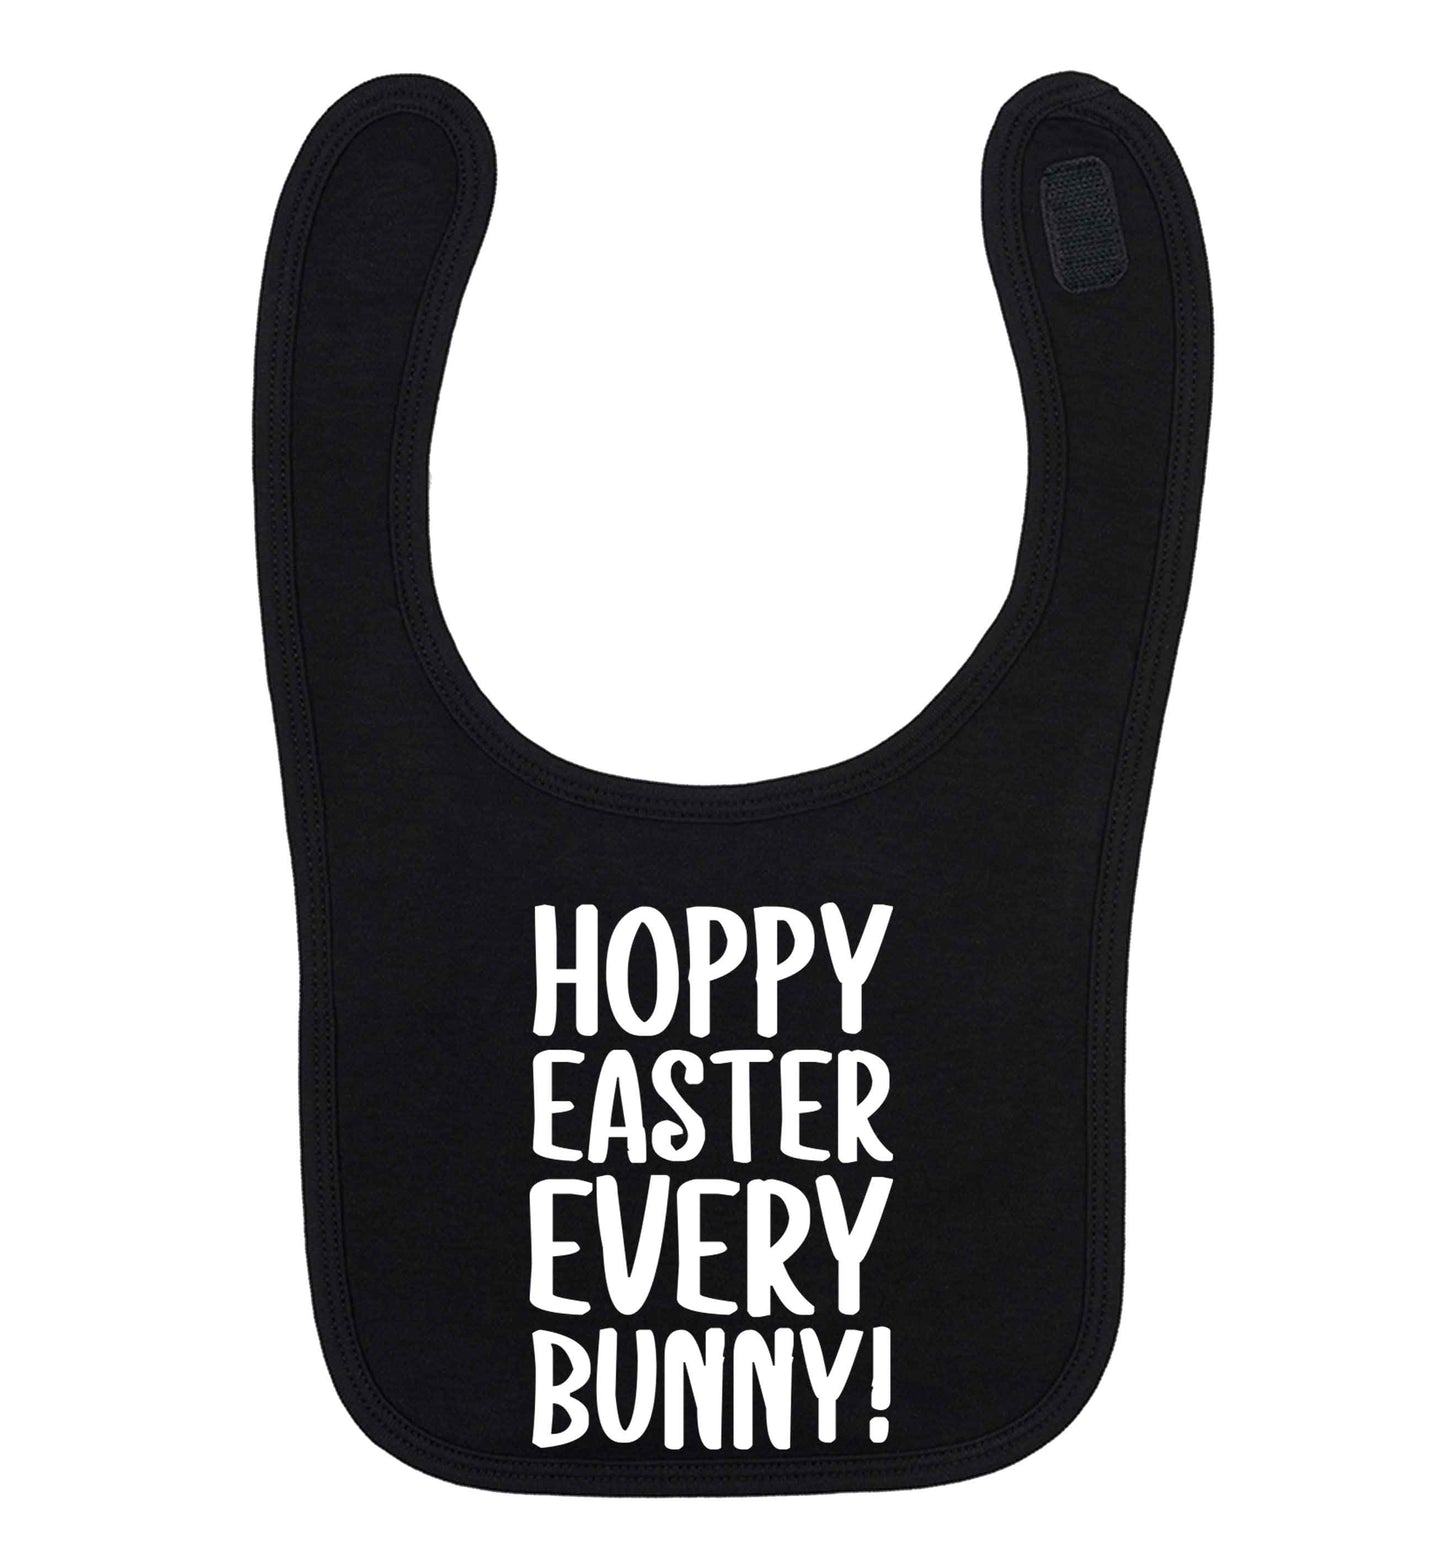 Hoppy Easter every bunny! black baby bib